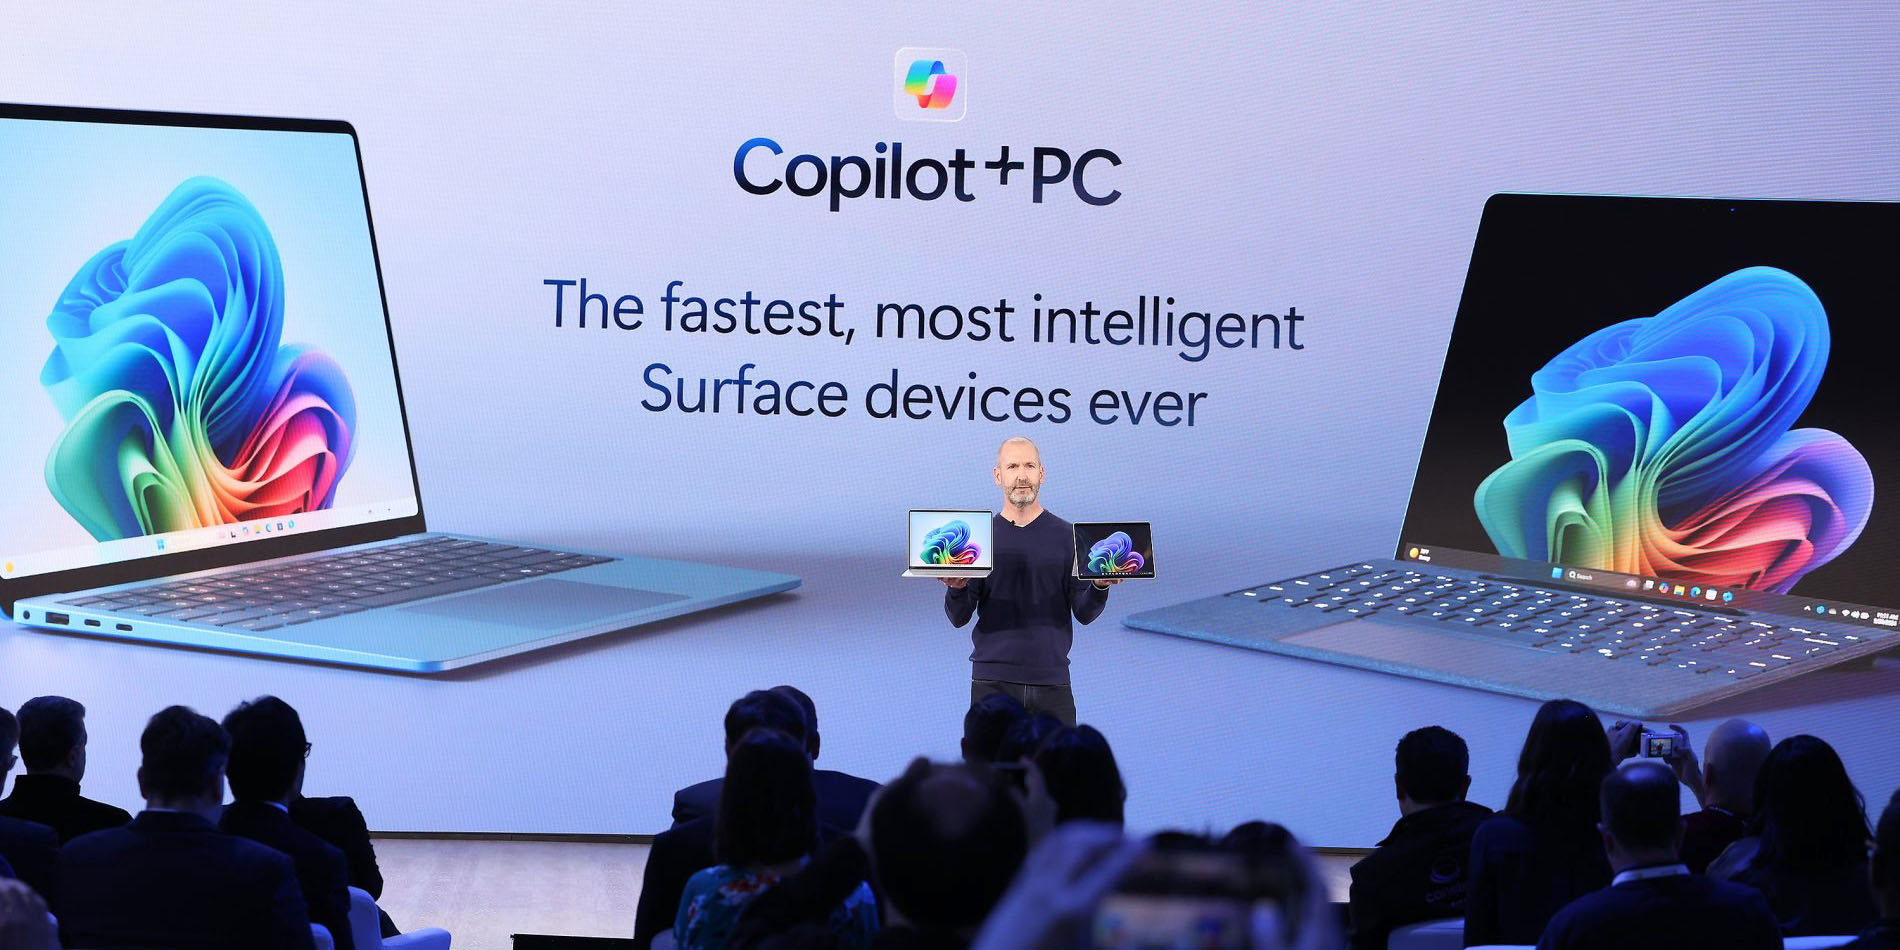 MacBook Air της Microsoft |  Copilot+ PC που εμφανίζονται στη σκηνή